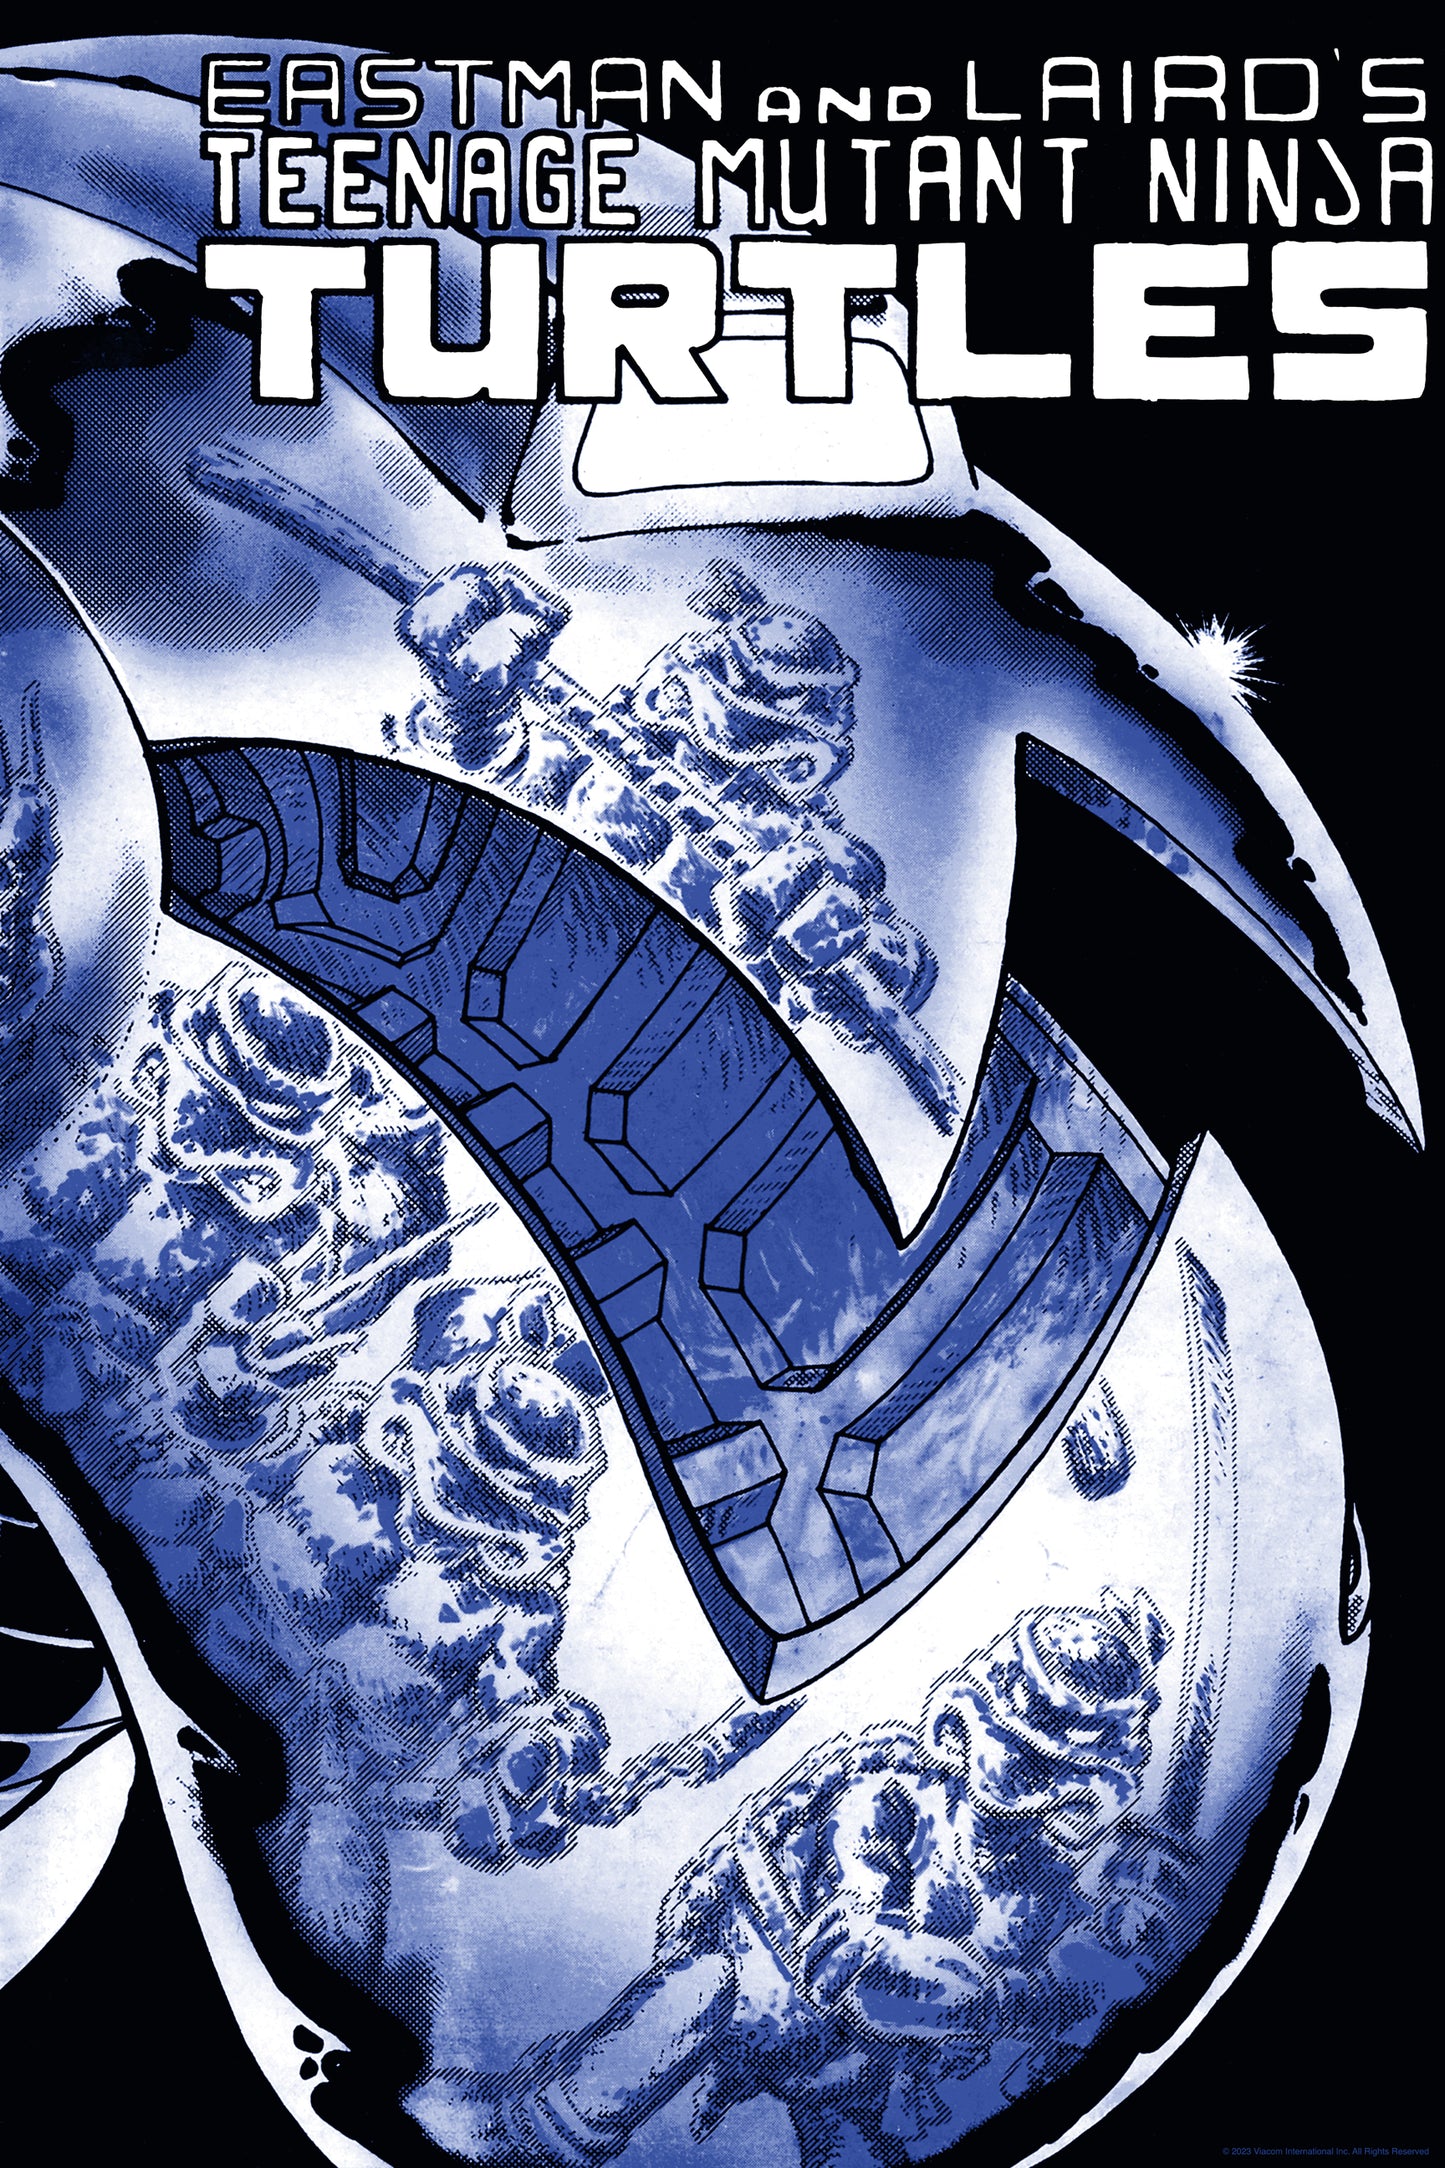 TMNT Issue #2 - Main Edition